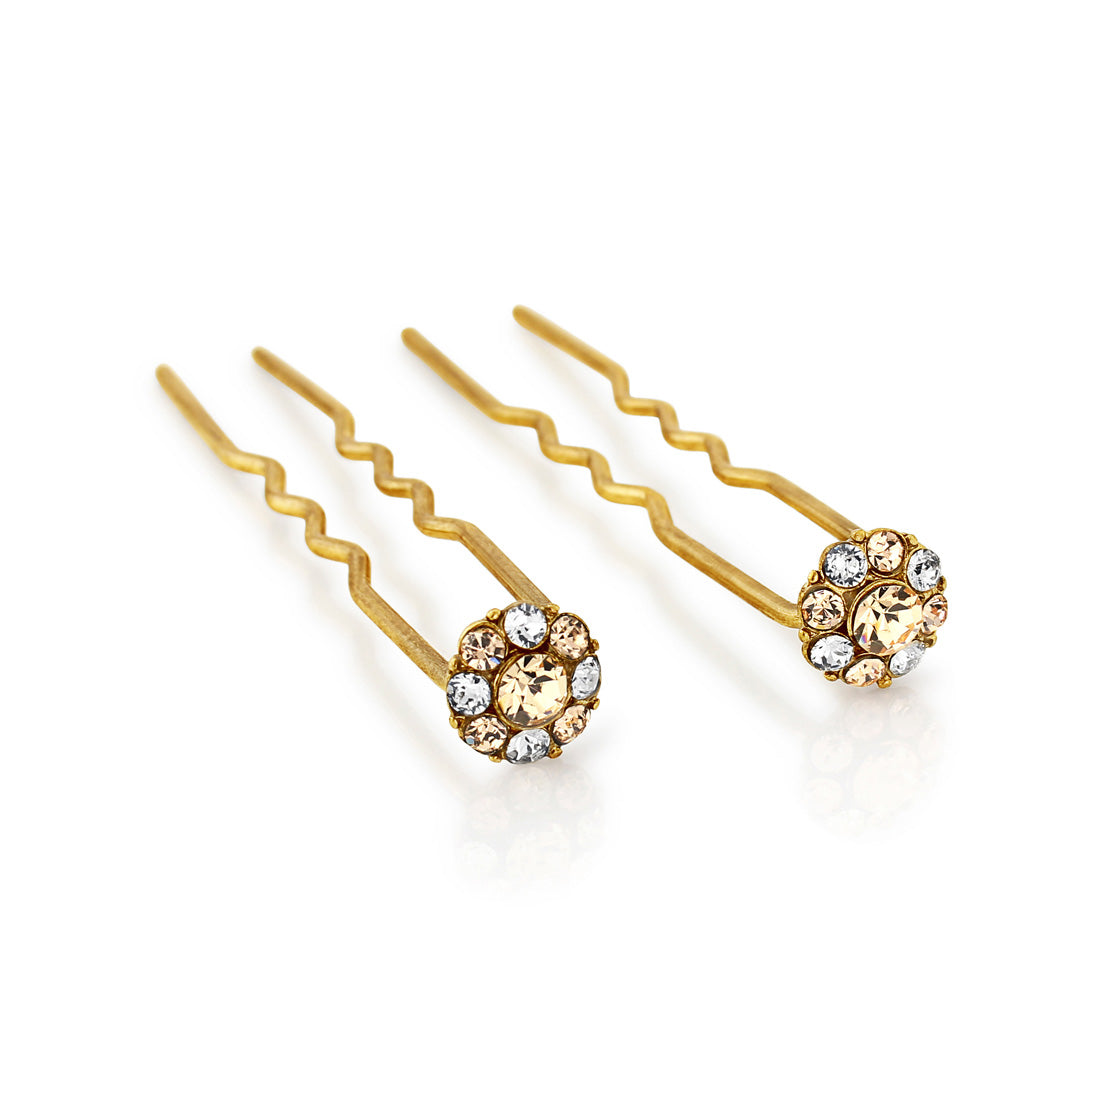 Shimmer of Peach Crystal & Gold Hair Pins - Pair